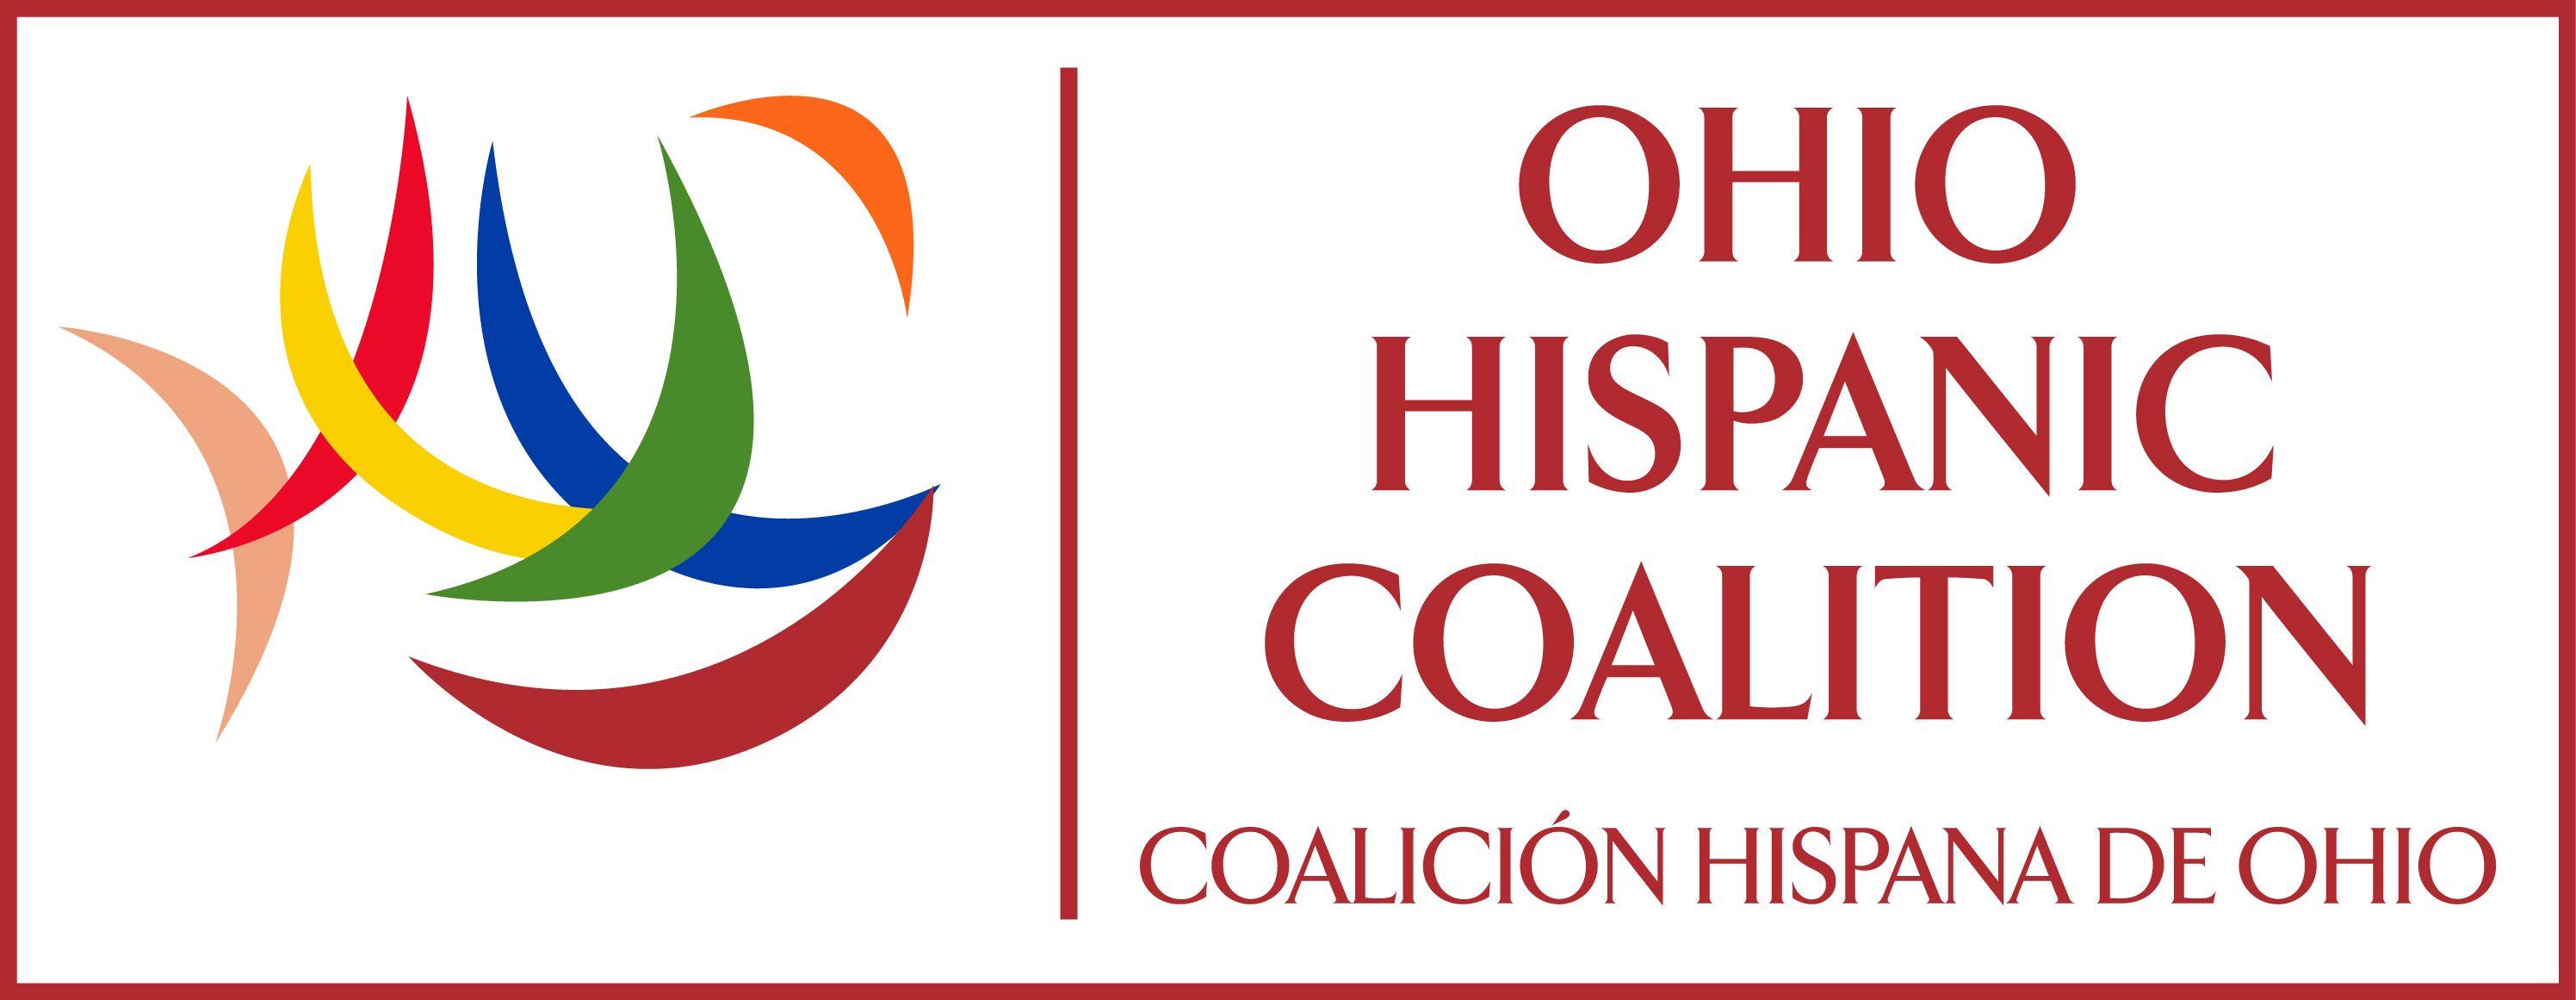 Hispanic Logo - Home Hispanic Coalition